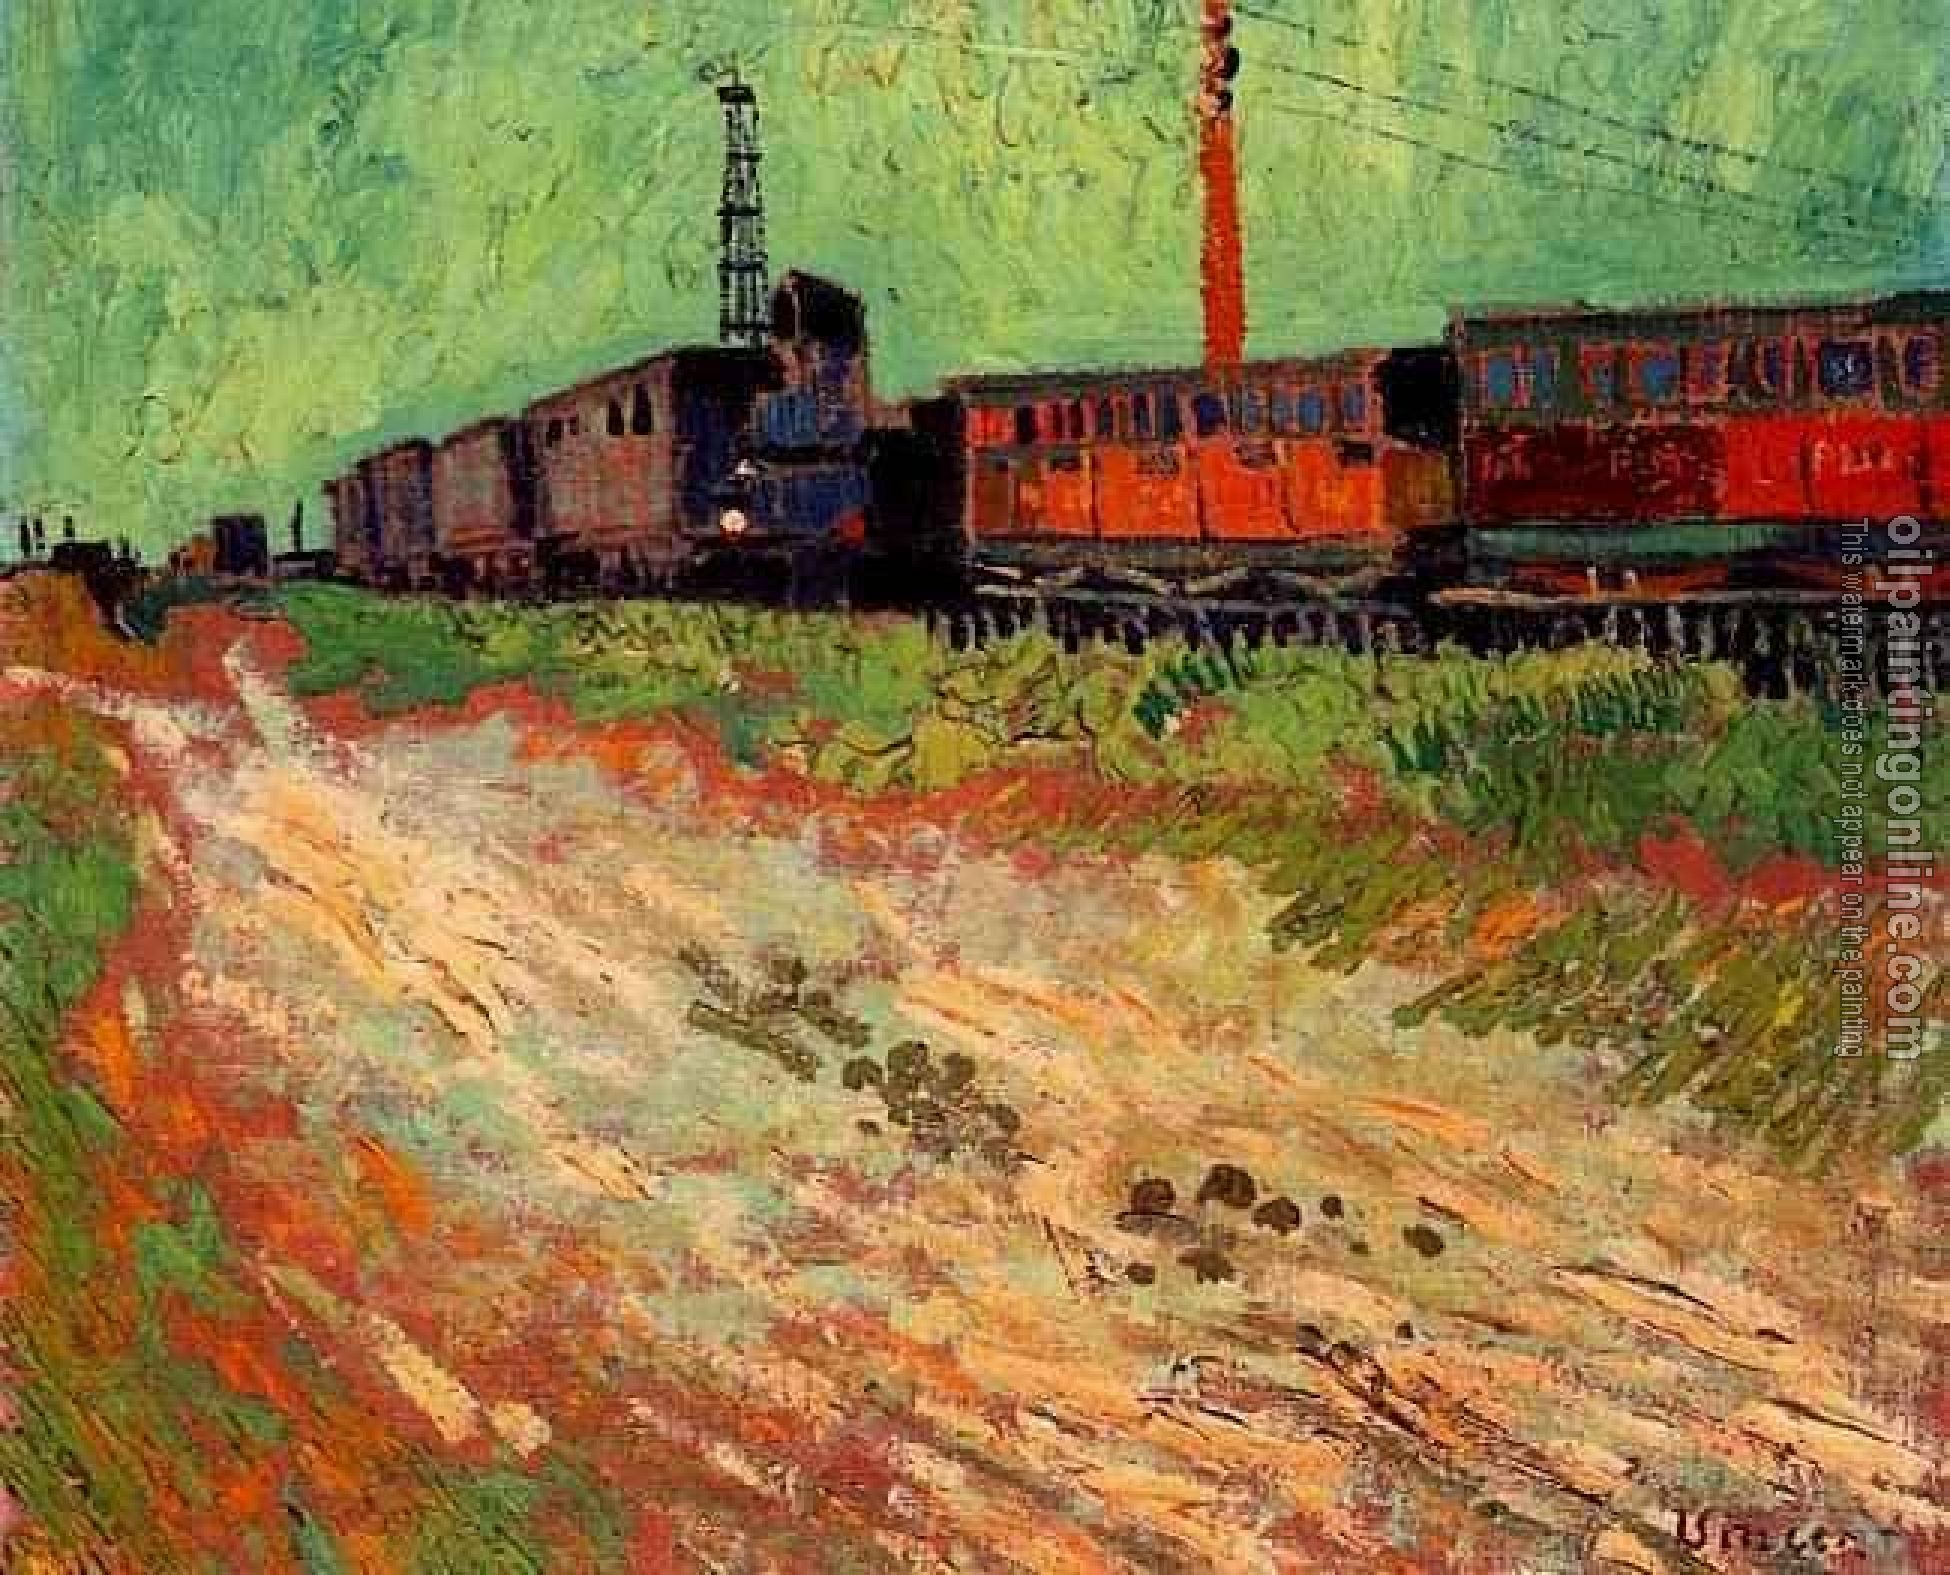 Gogh, Vincent van - Railway Carriages